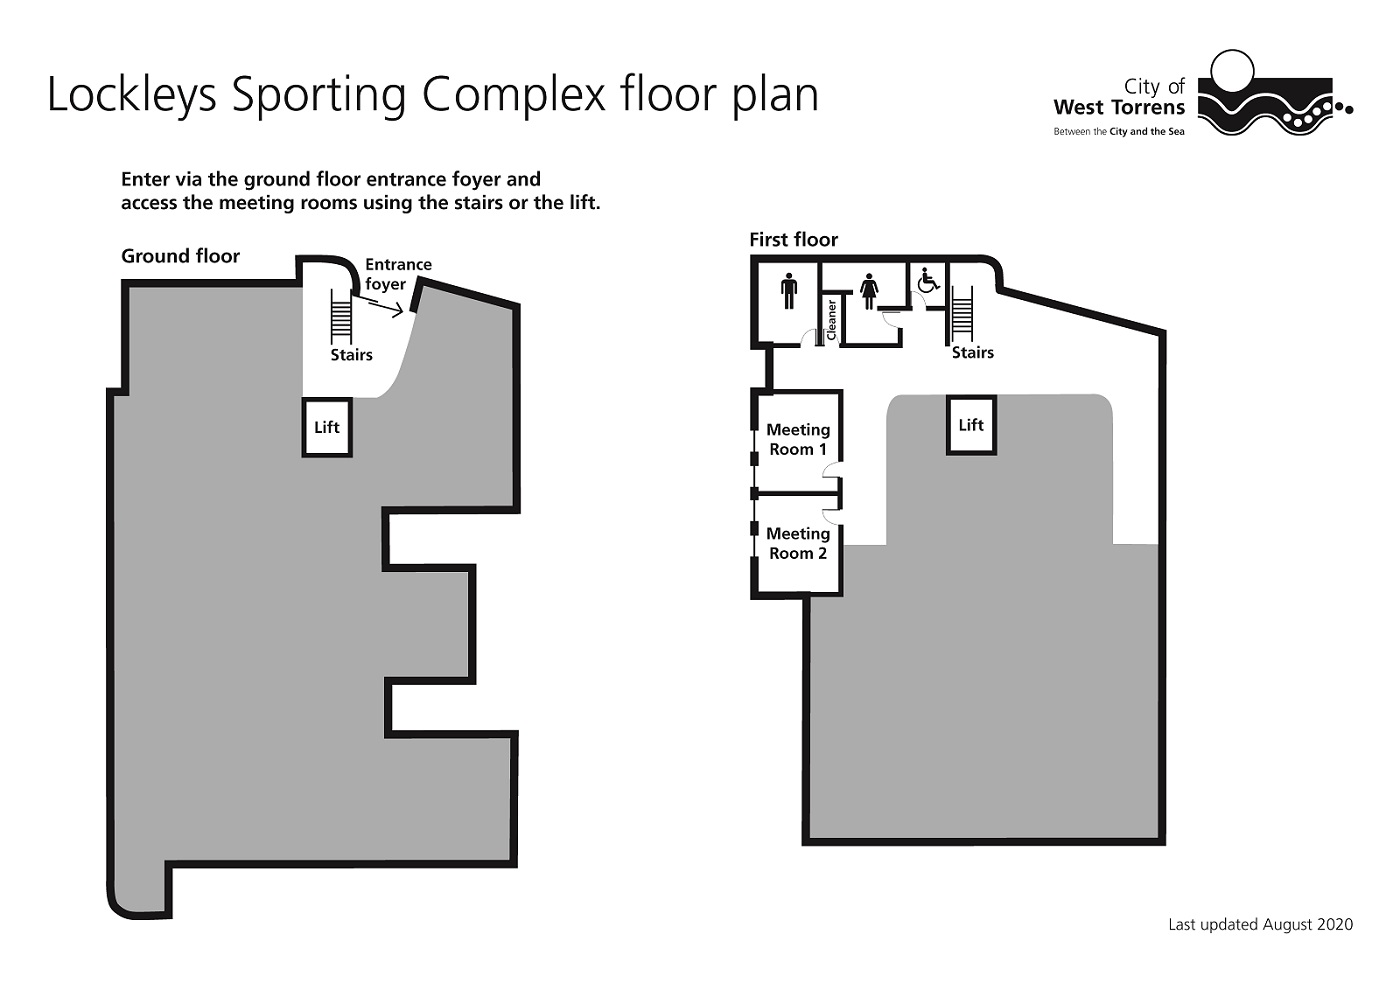 Lockleys Sporting Facility floor plan